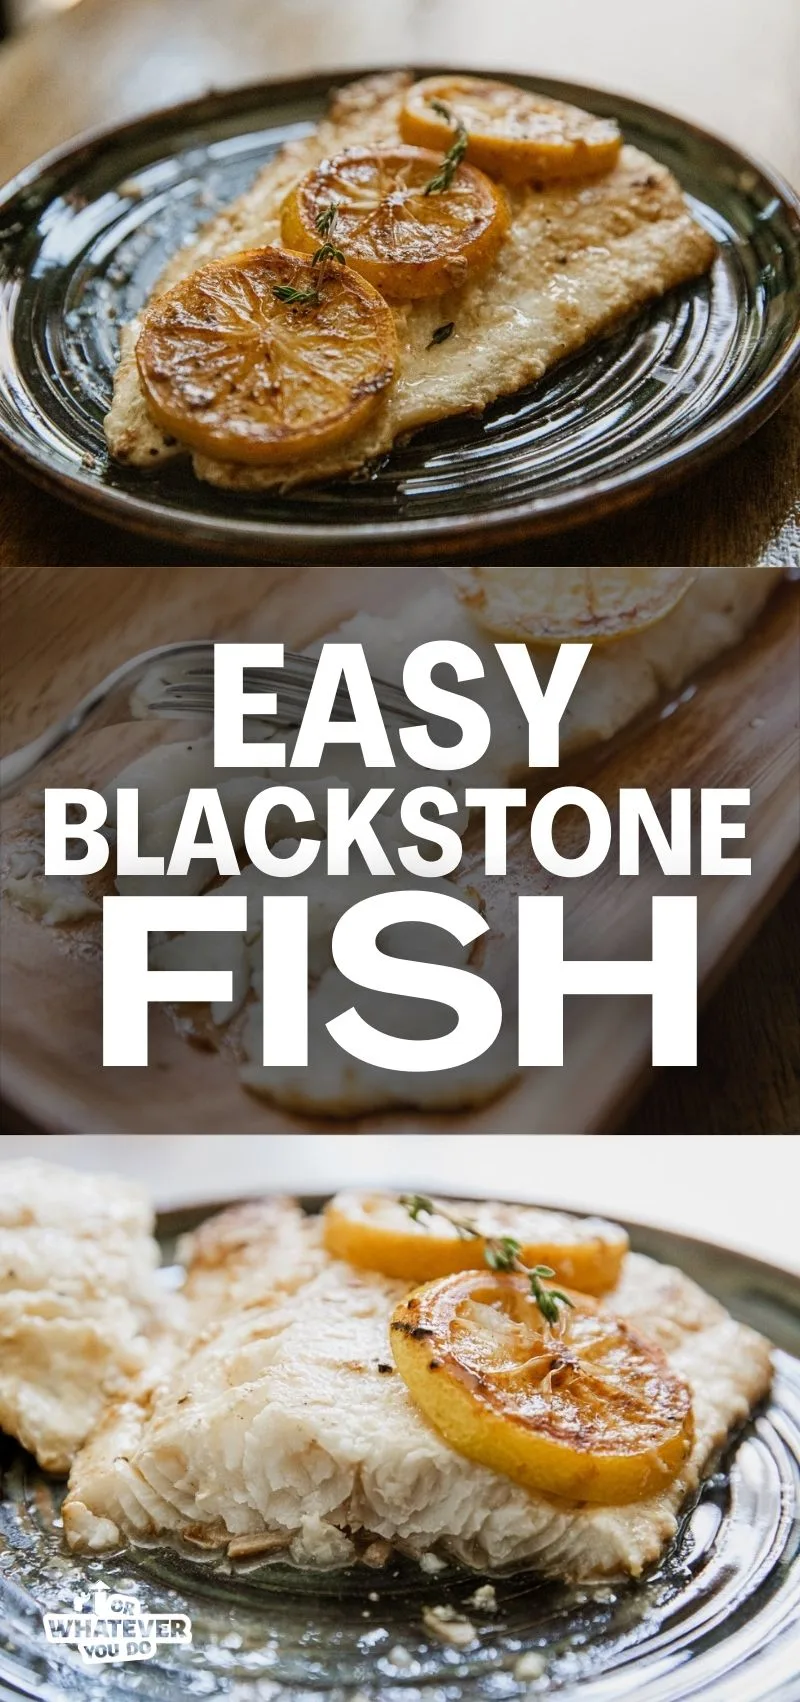 Fish on the Blackstone